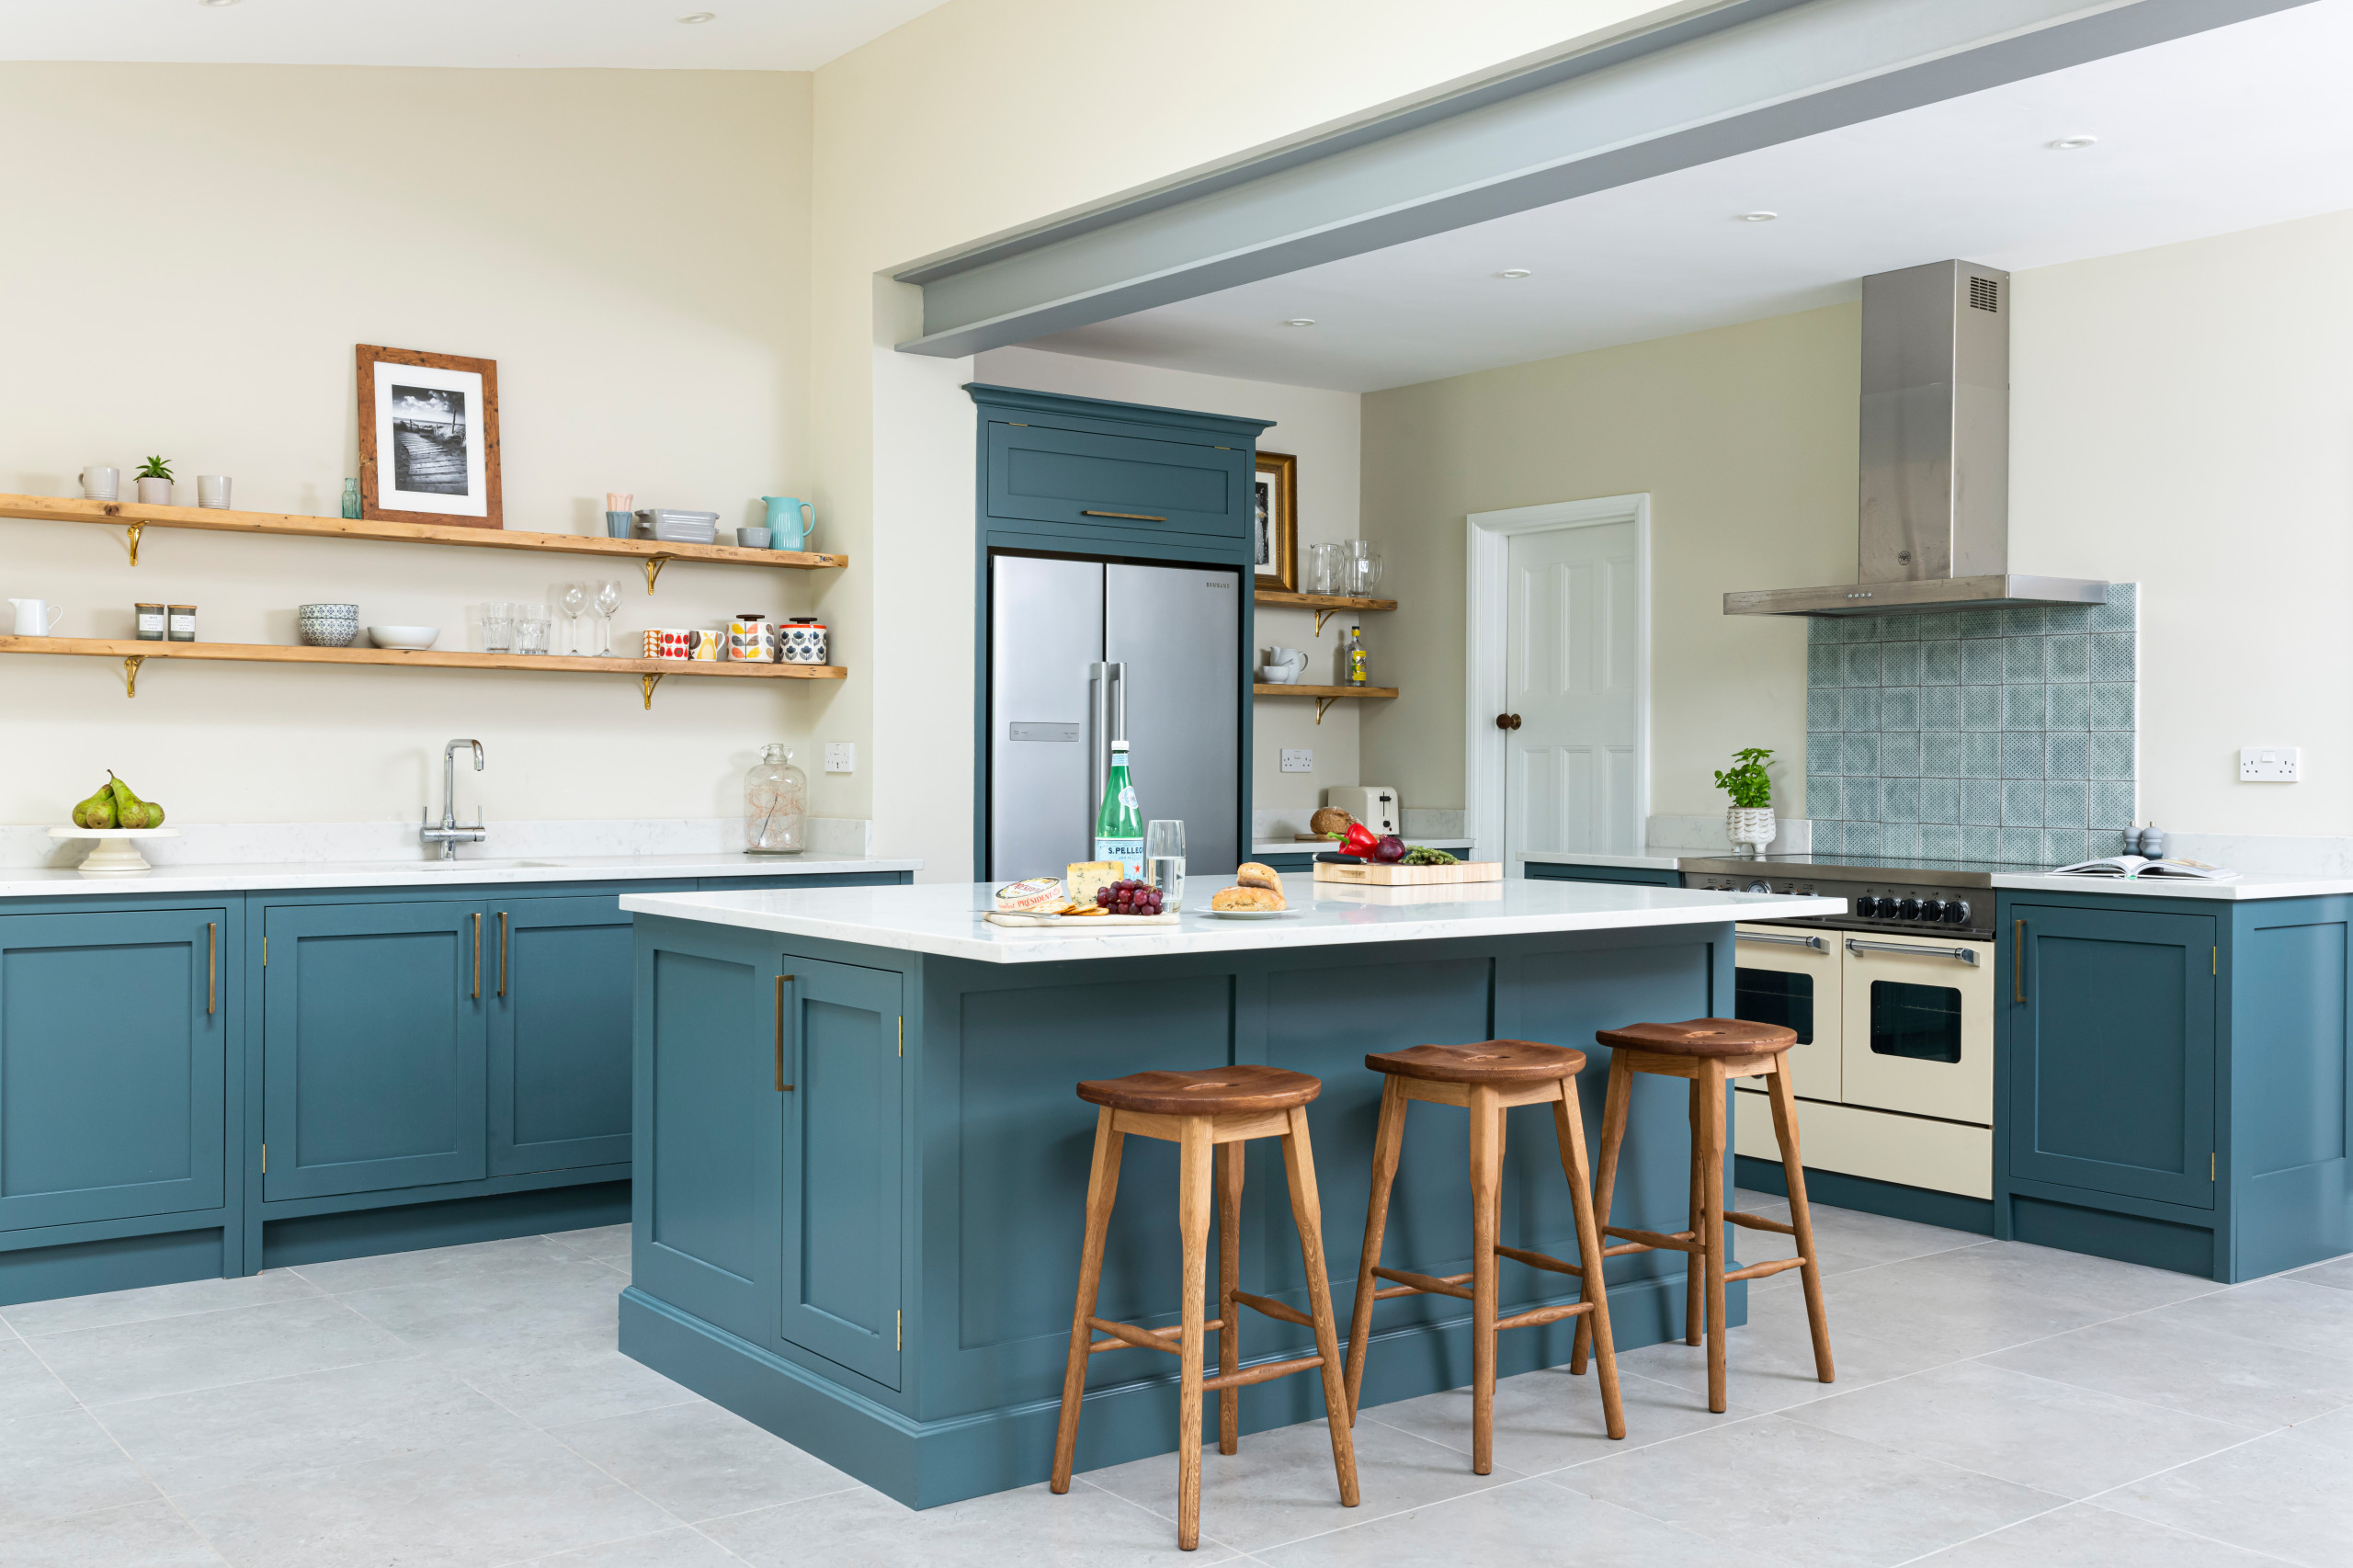 https://st.hzcdn.com/simgs/pictures/kitchens/stunning-blue-grey-kitchen-classic-kitchens-direct-img~f30135f60f7b2598_14-9798-1-185afaa.jpg